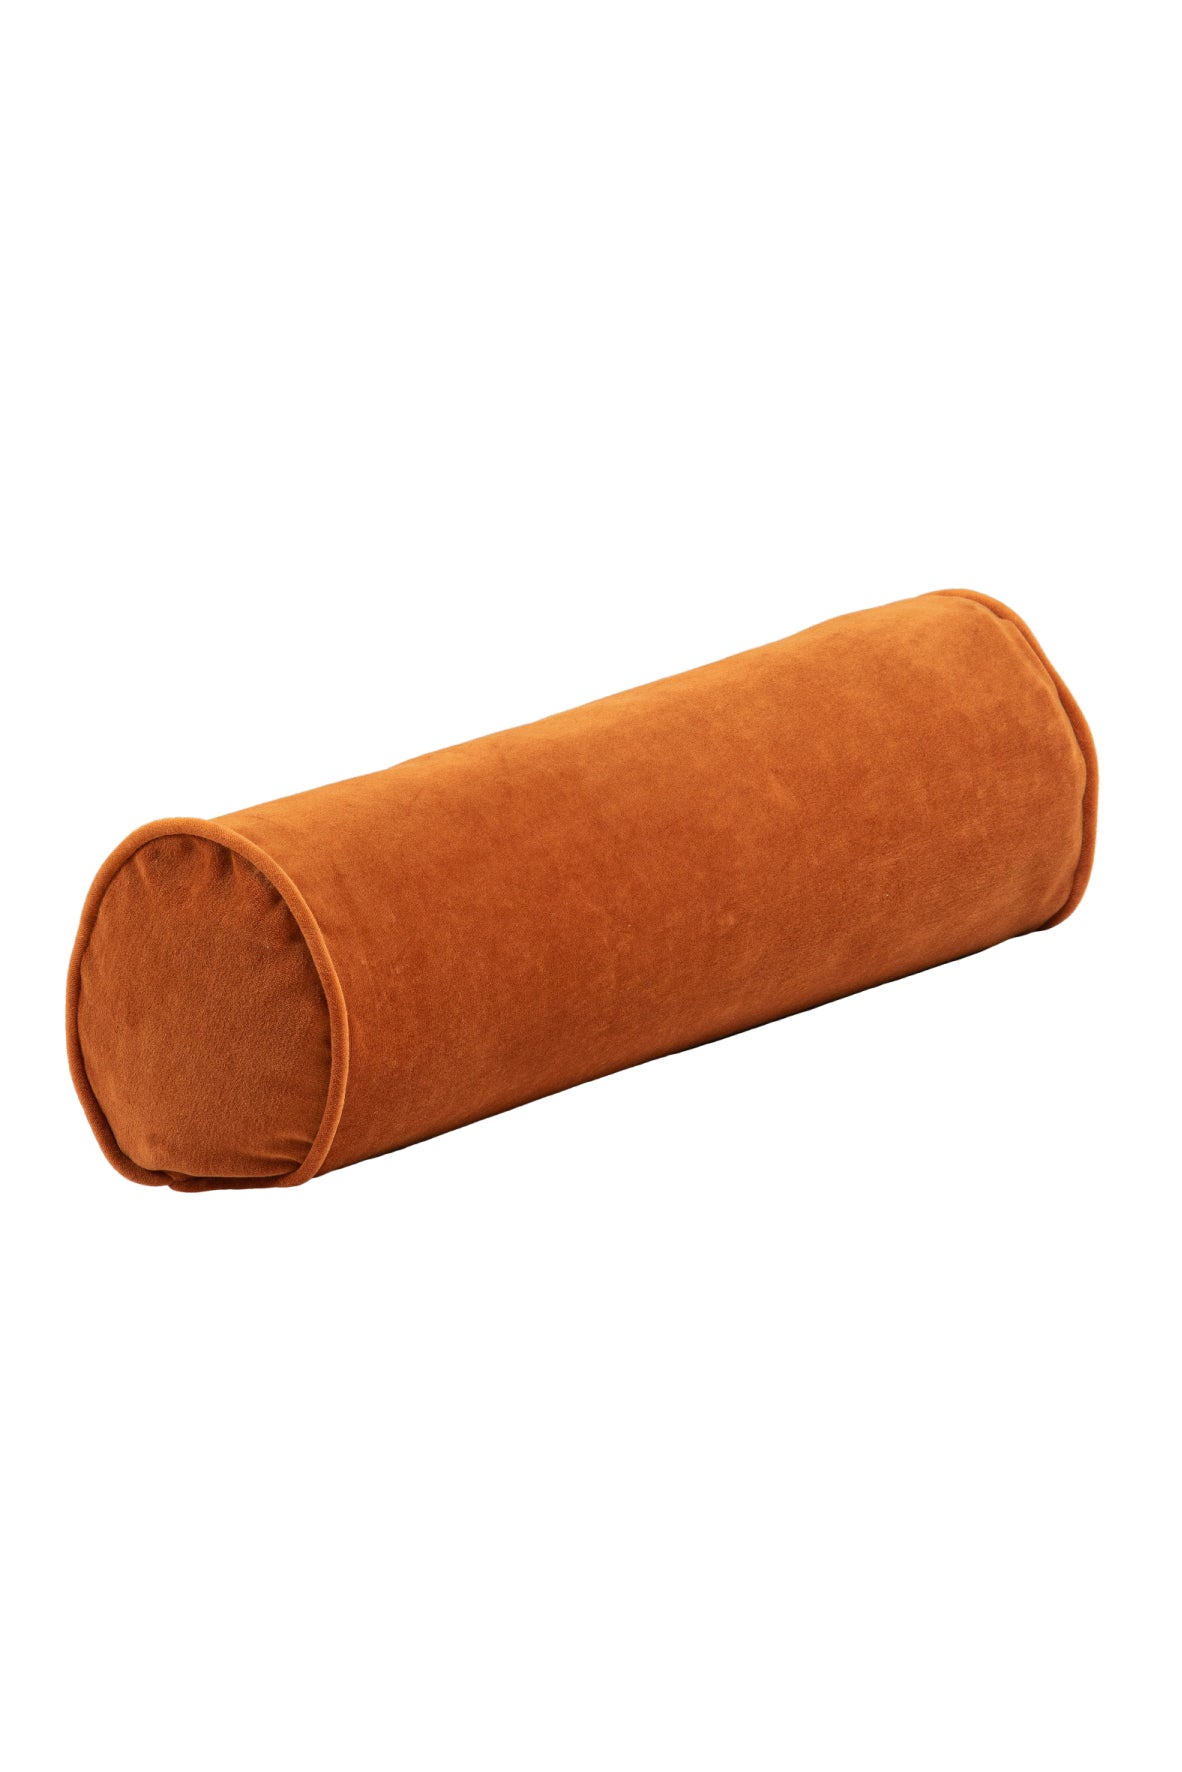 Cinnamon Roll Cushion